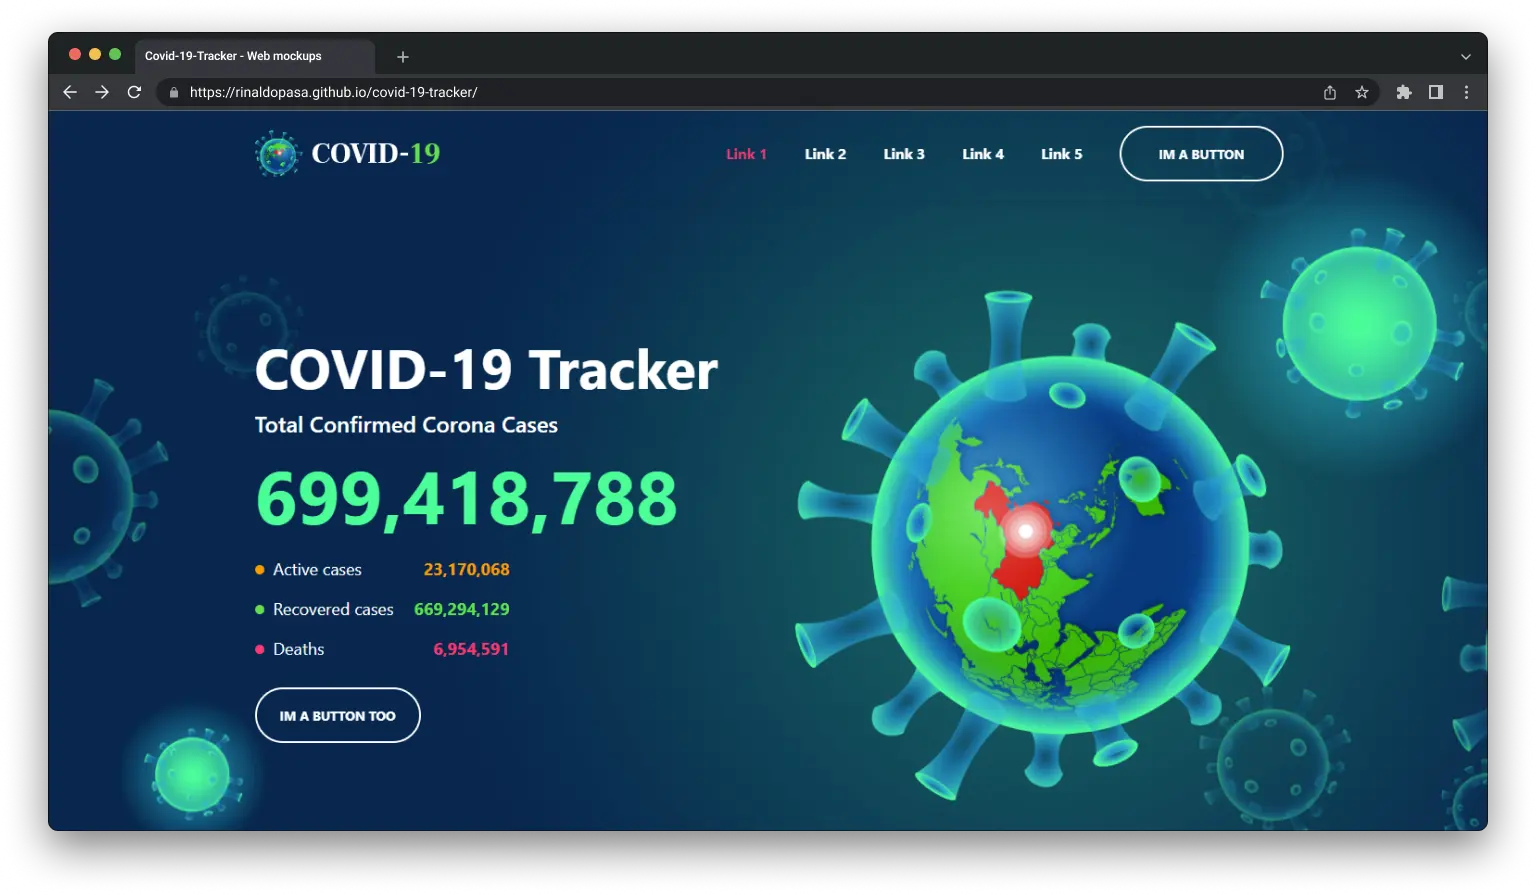 Homepage of covid-19 tracker